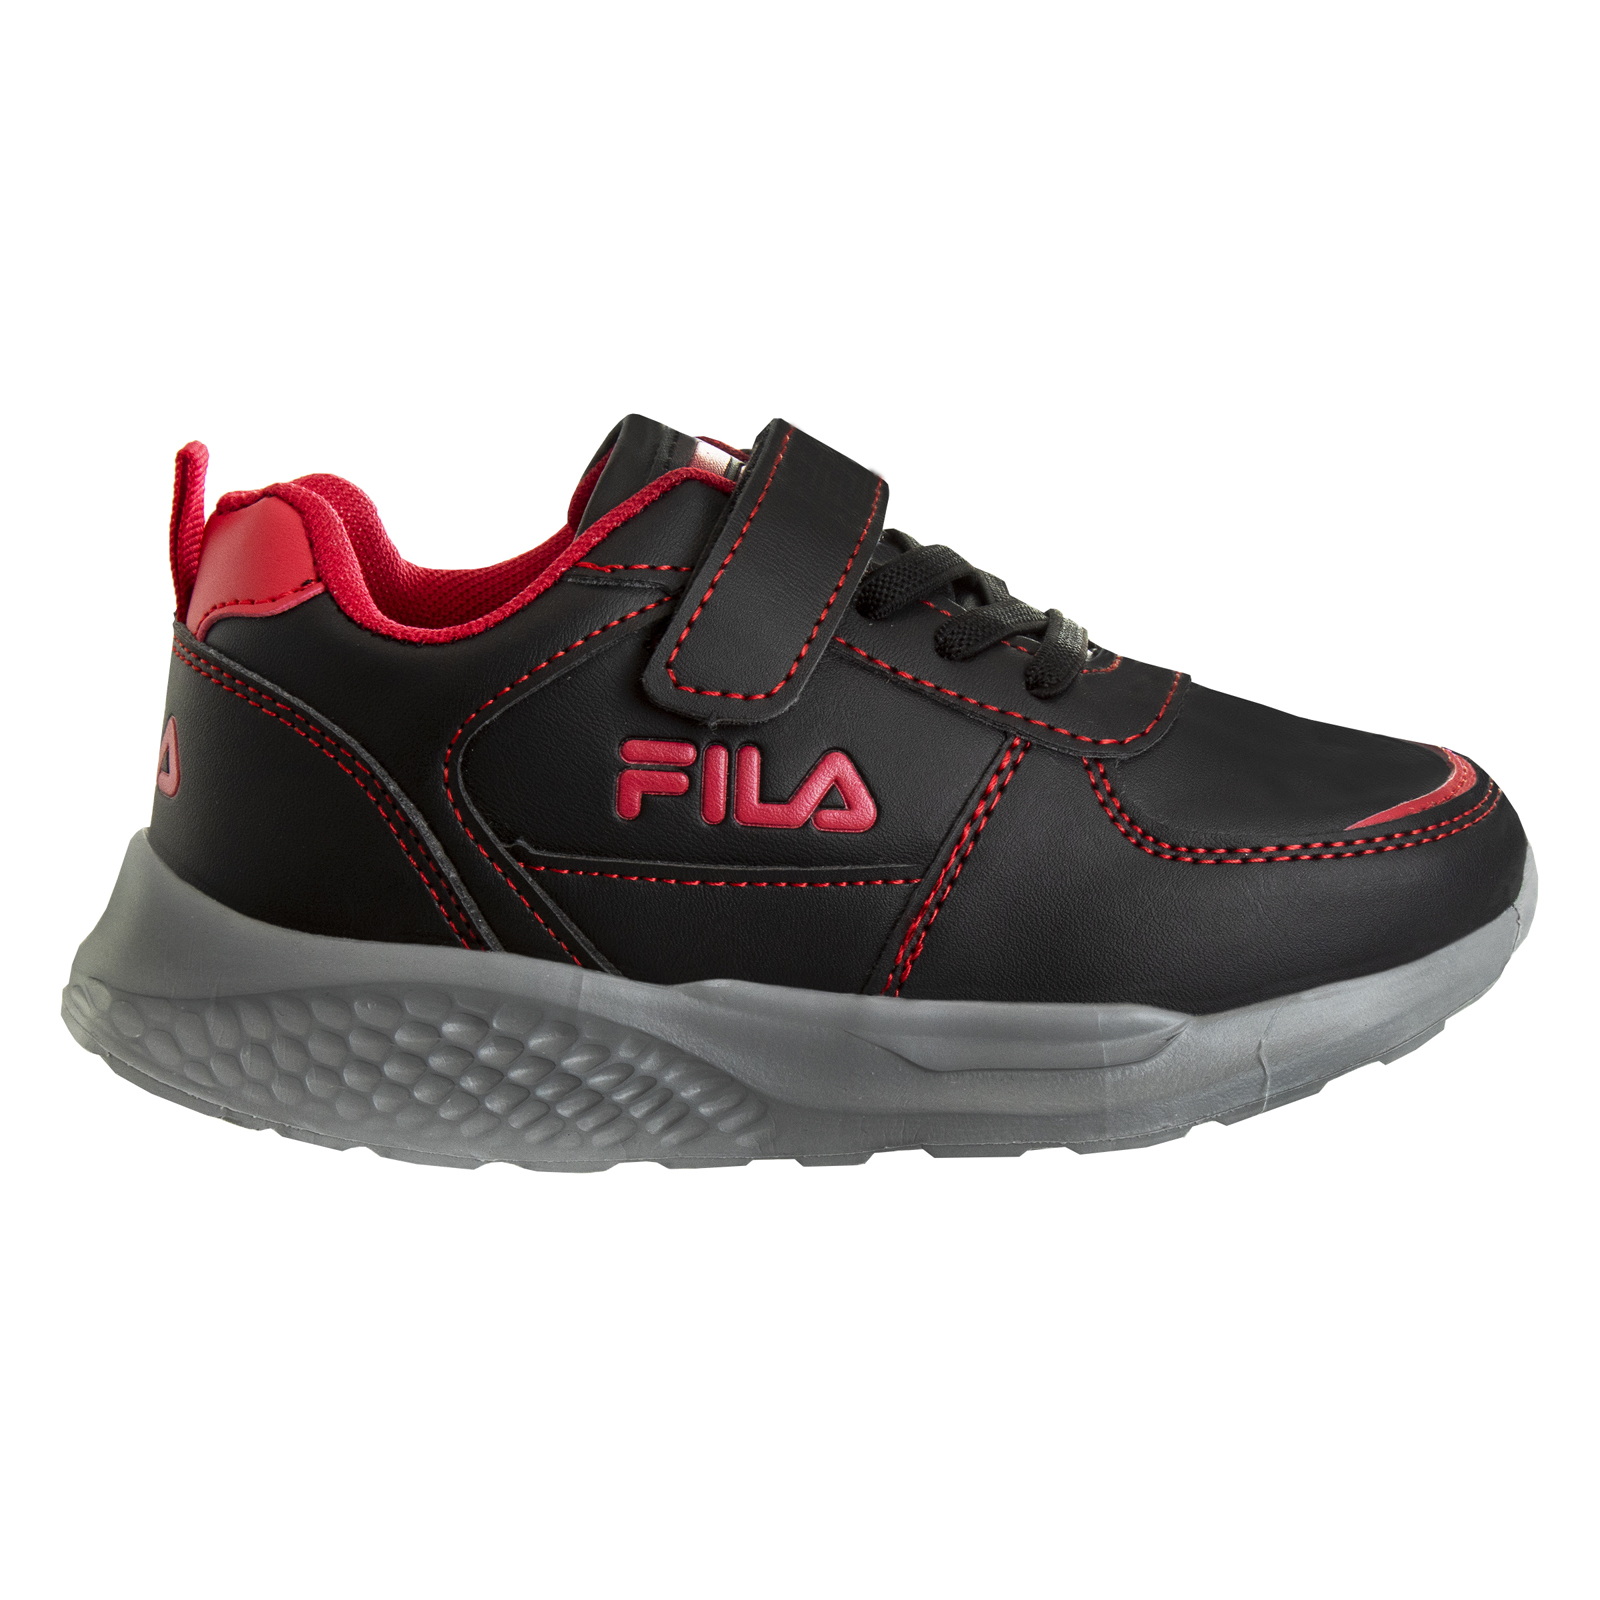 Fila - COMFORT SHINE 2 FOOTWEAR - BLACK RED TRUE Παιδικά > Παπούτσια > Αθλητικά > Παπούτσι Low Cut